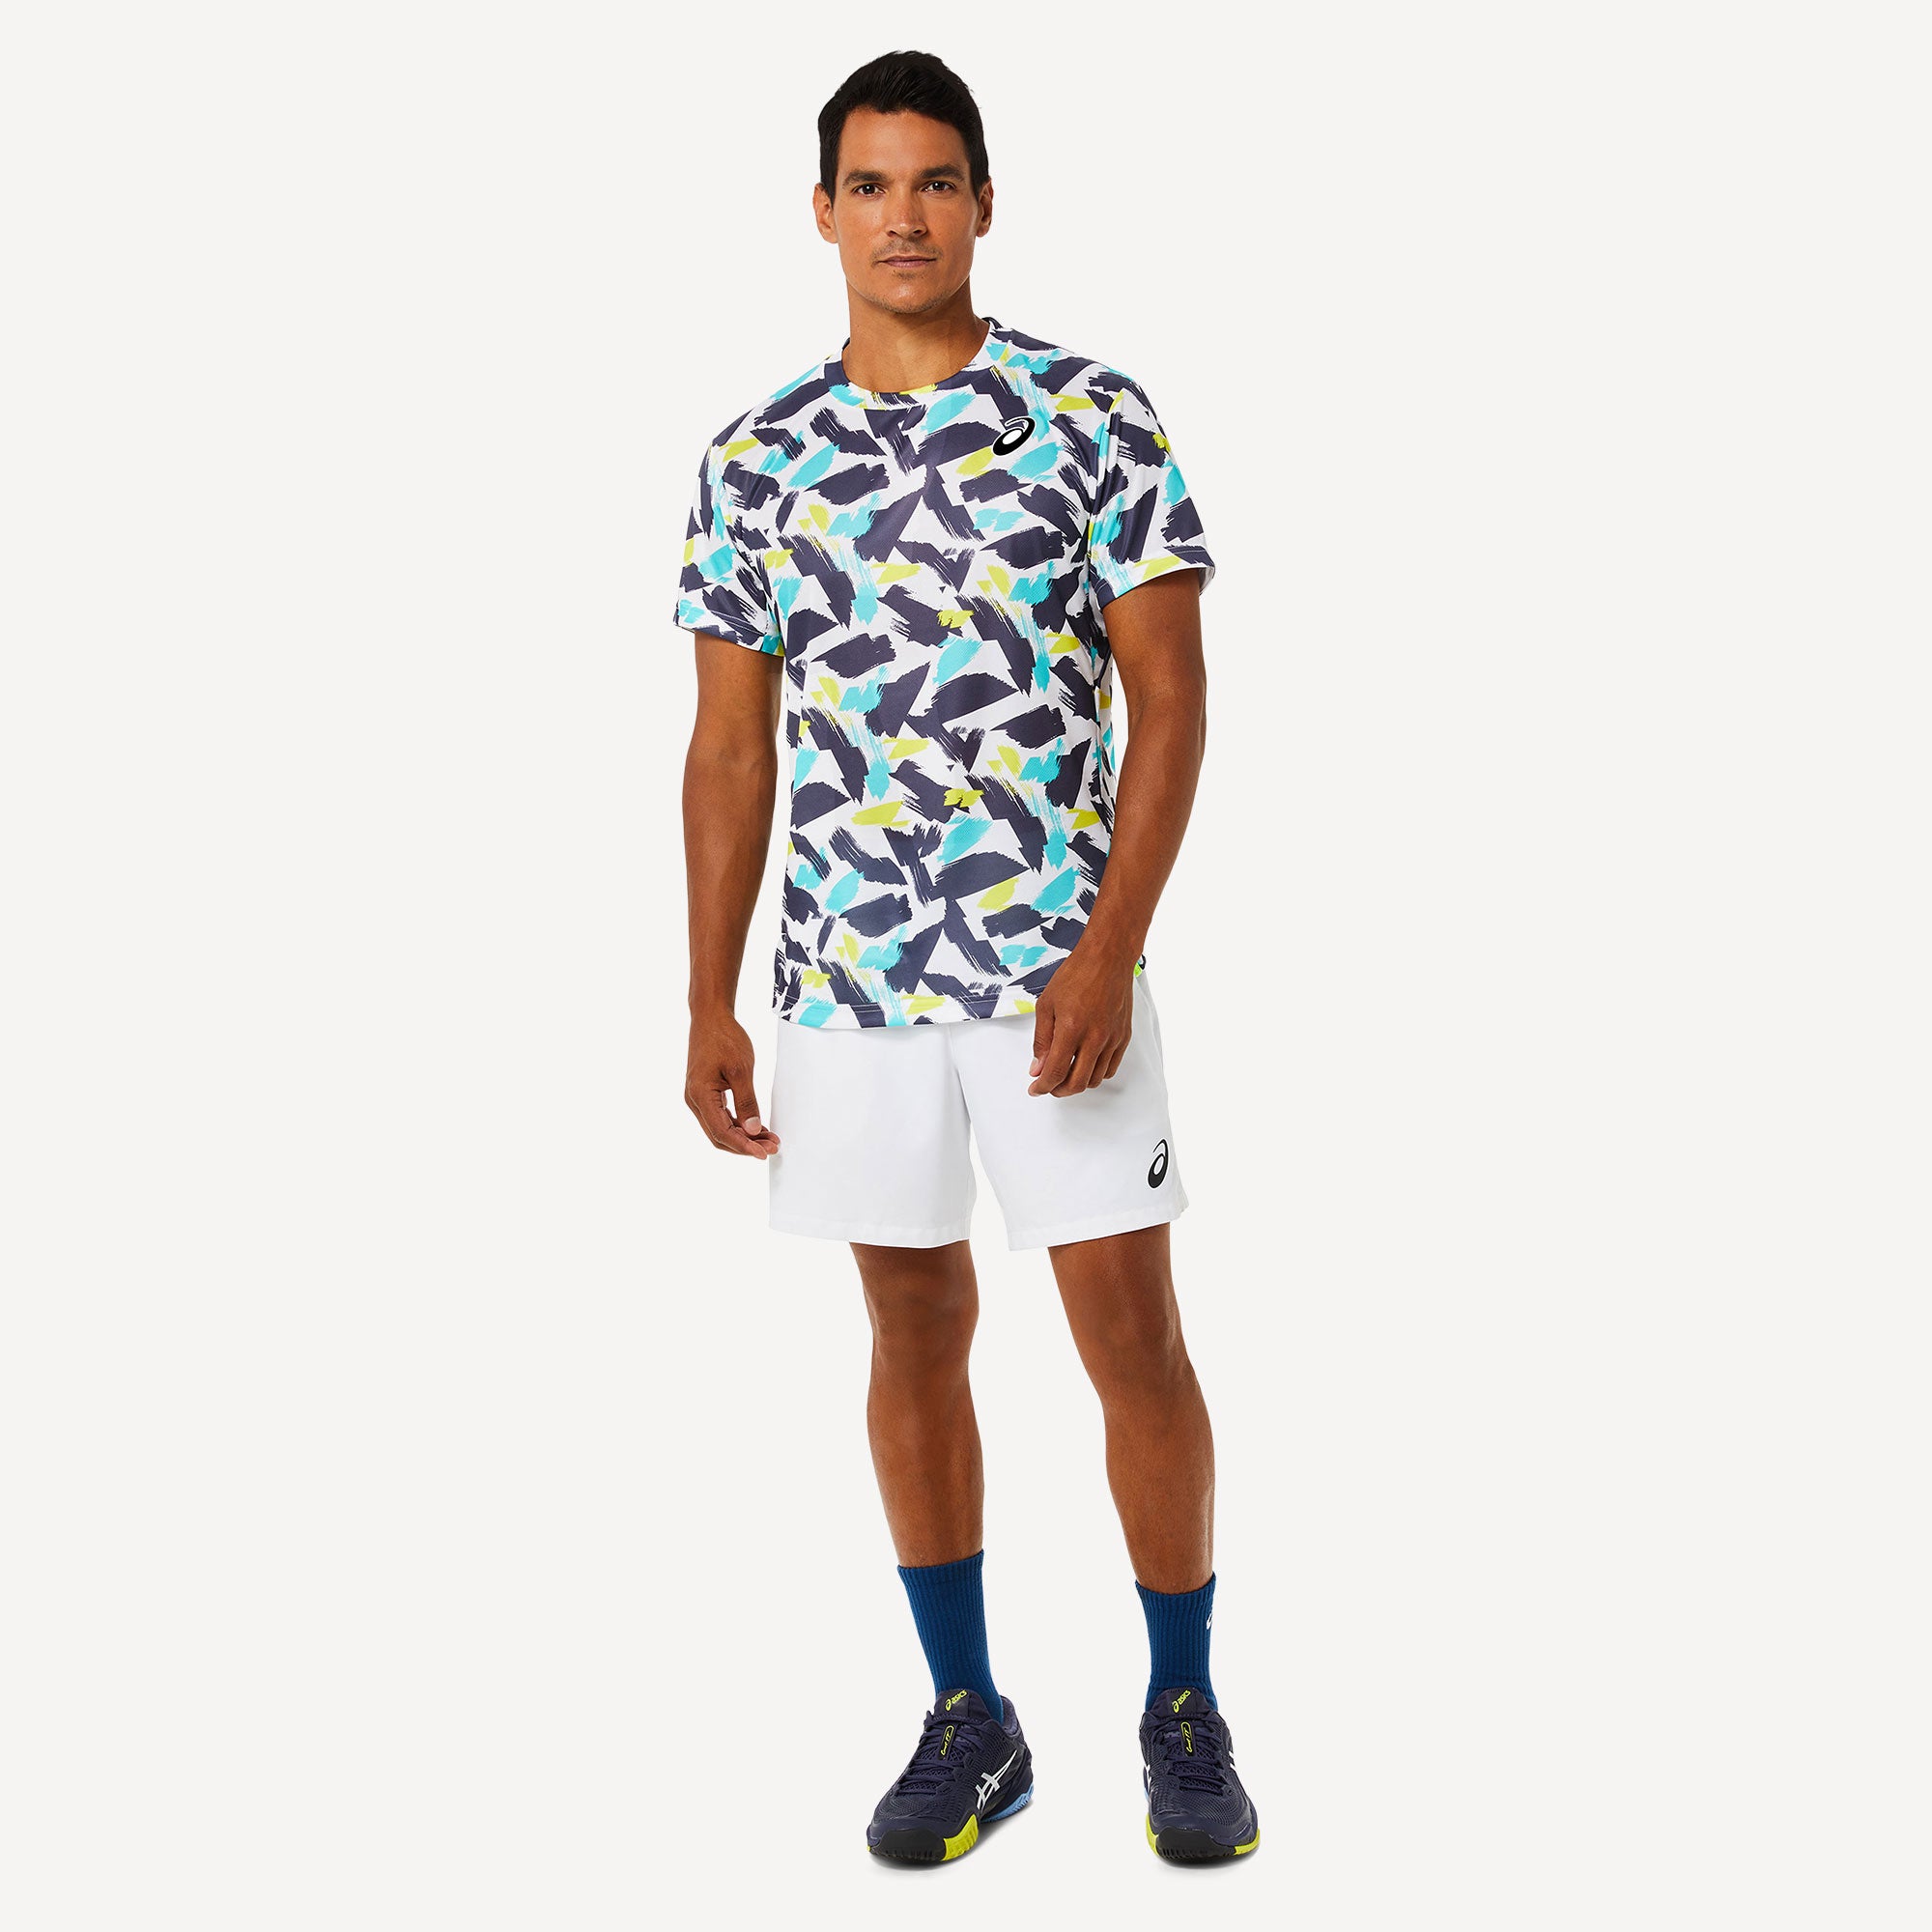 ASICS Match Men's Graphic Tennis Shirt White (6)